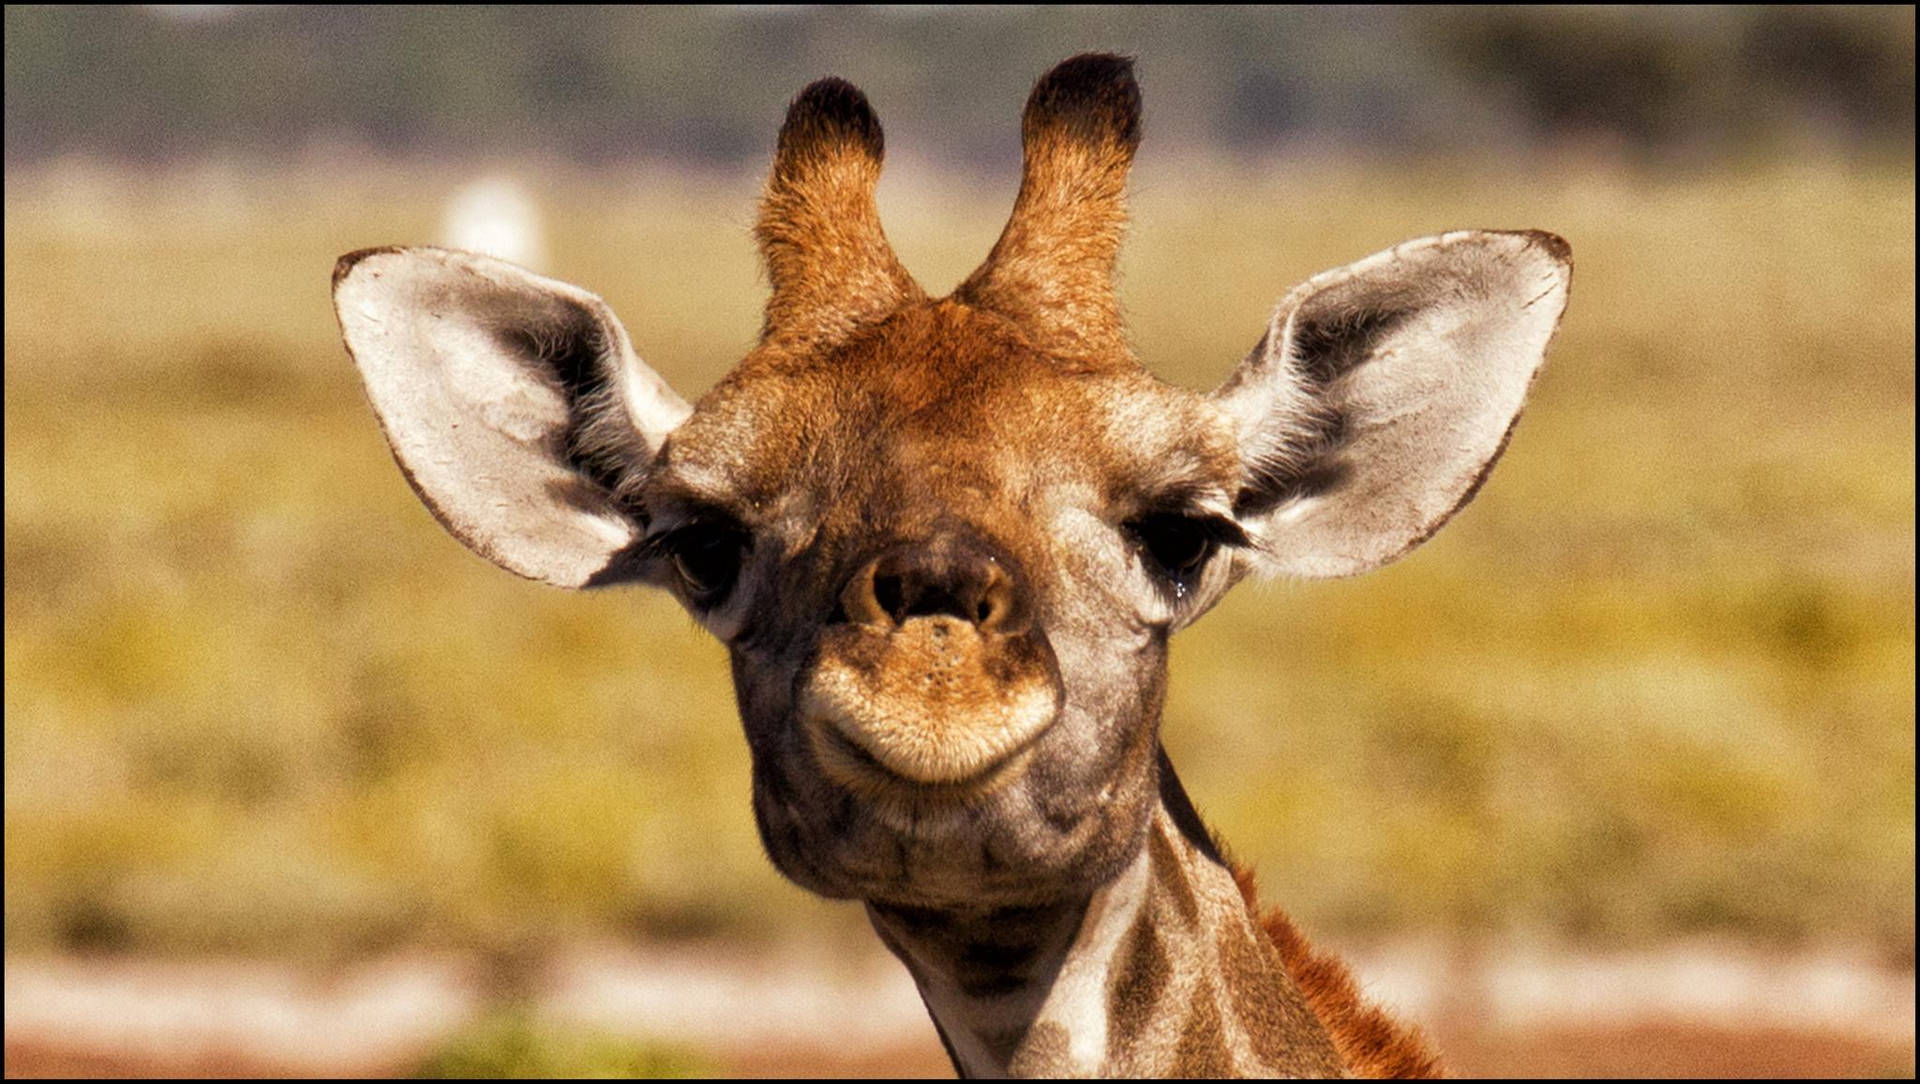 Baby Giraffe Long Ears Wallpaper